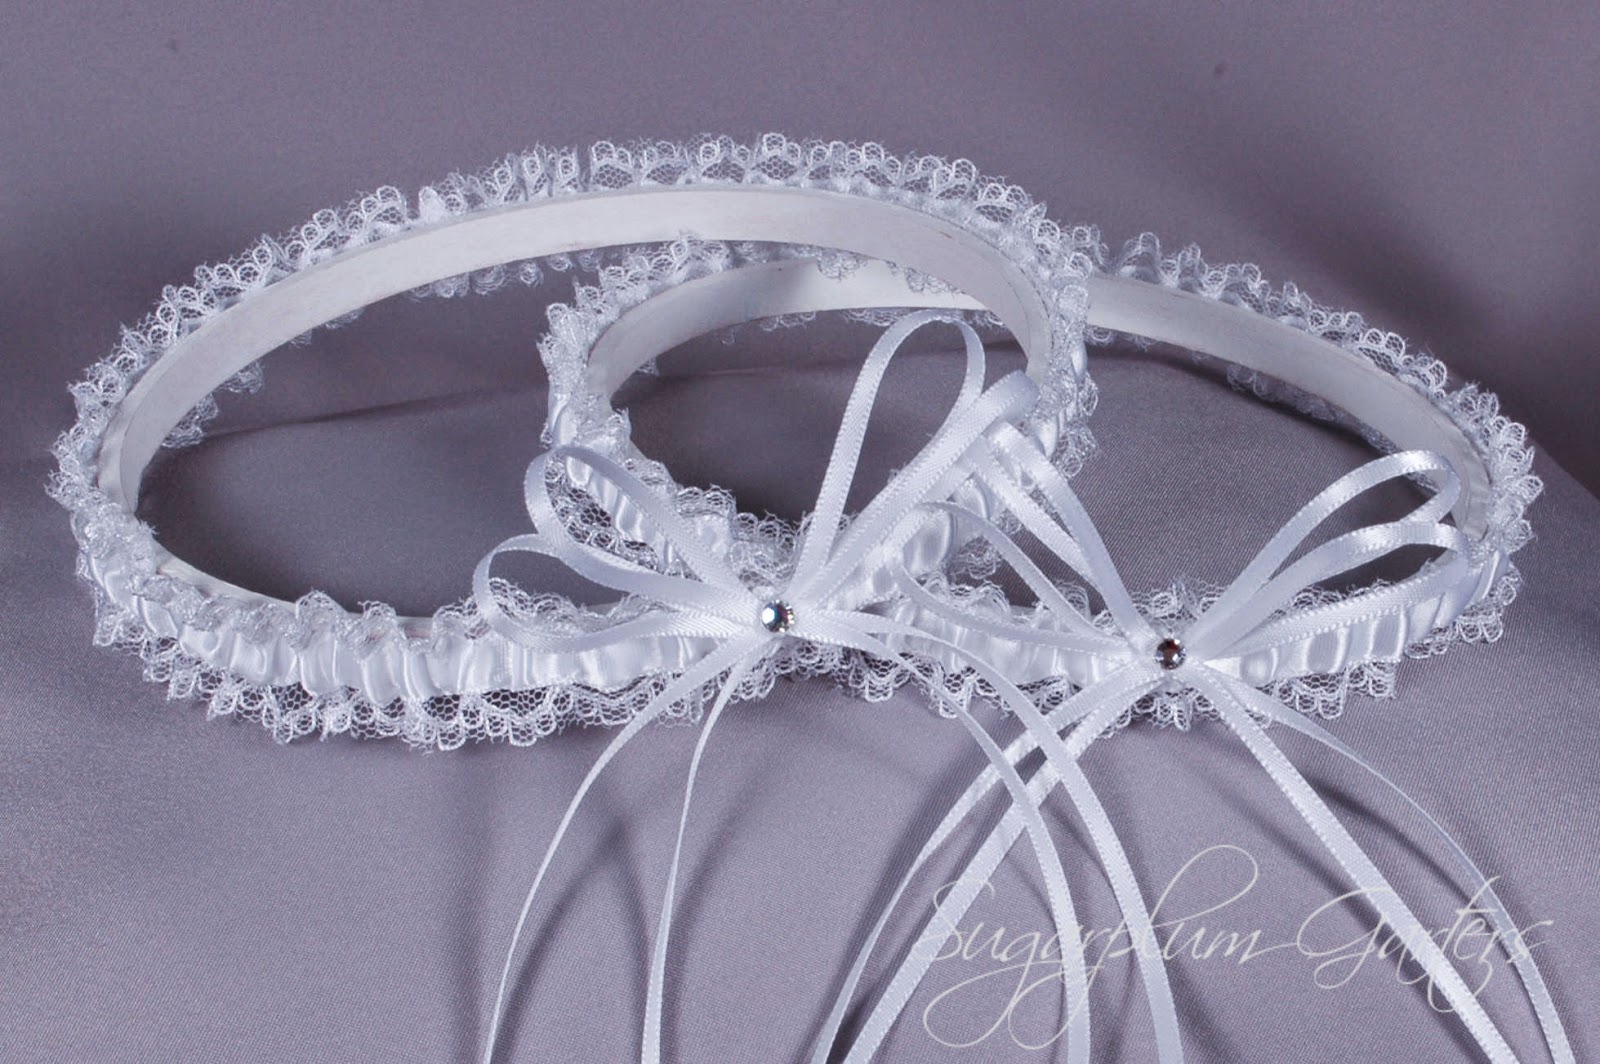 Wedding Garter Set in White Satin and Lace by Sugarplum Garters